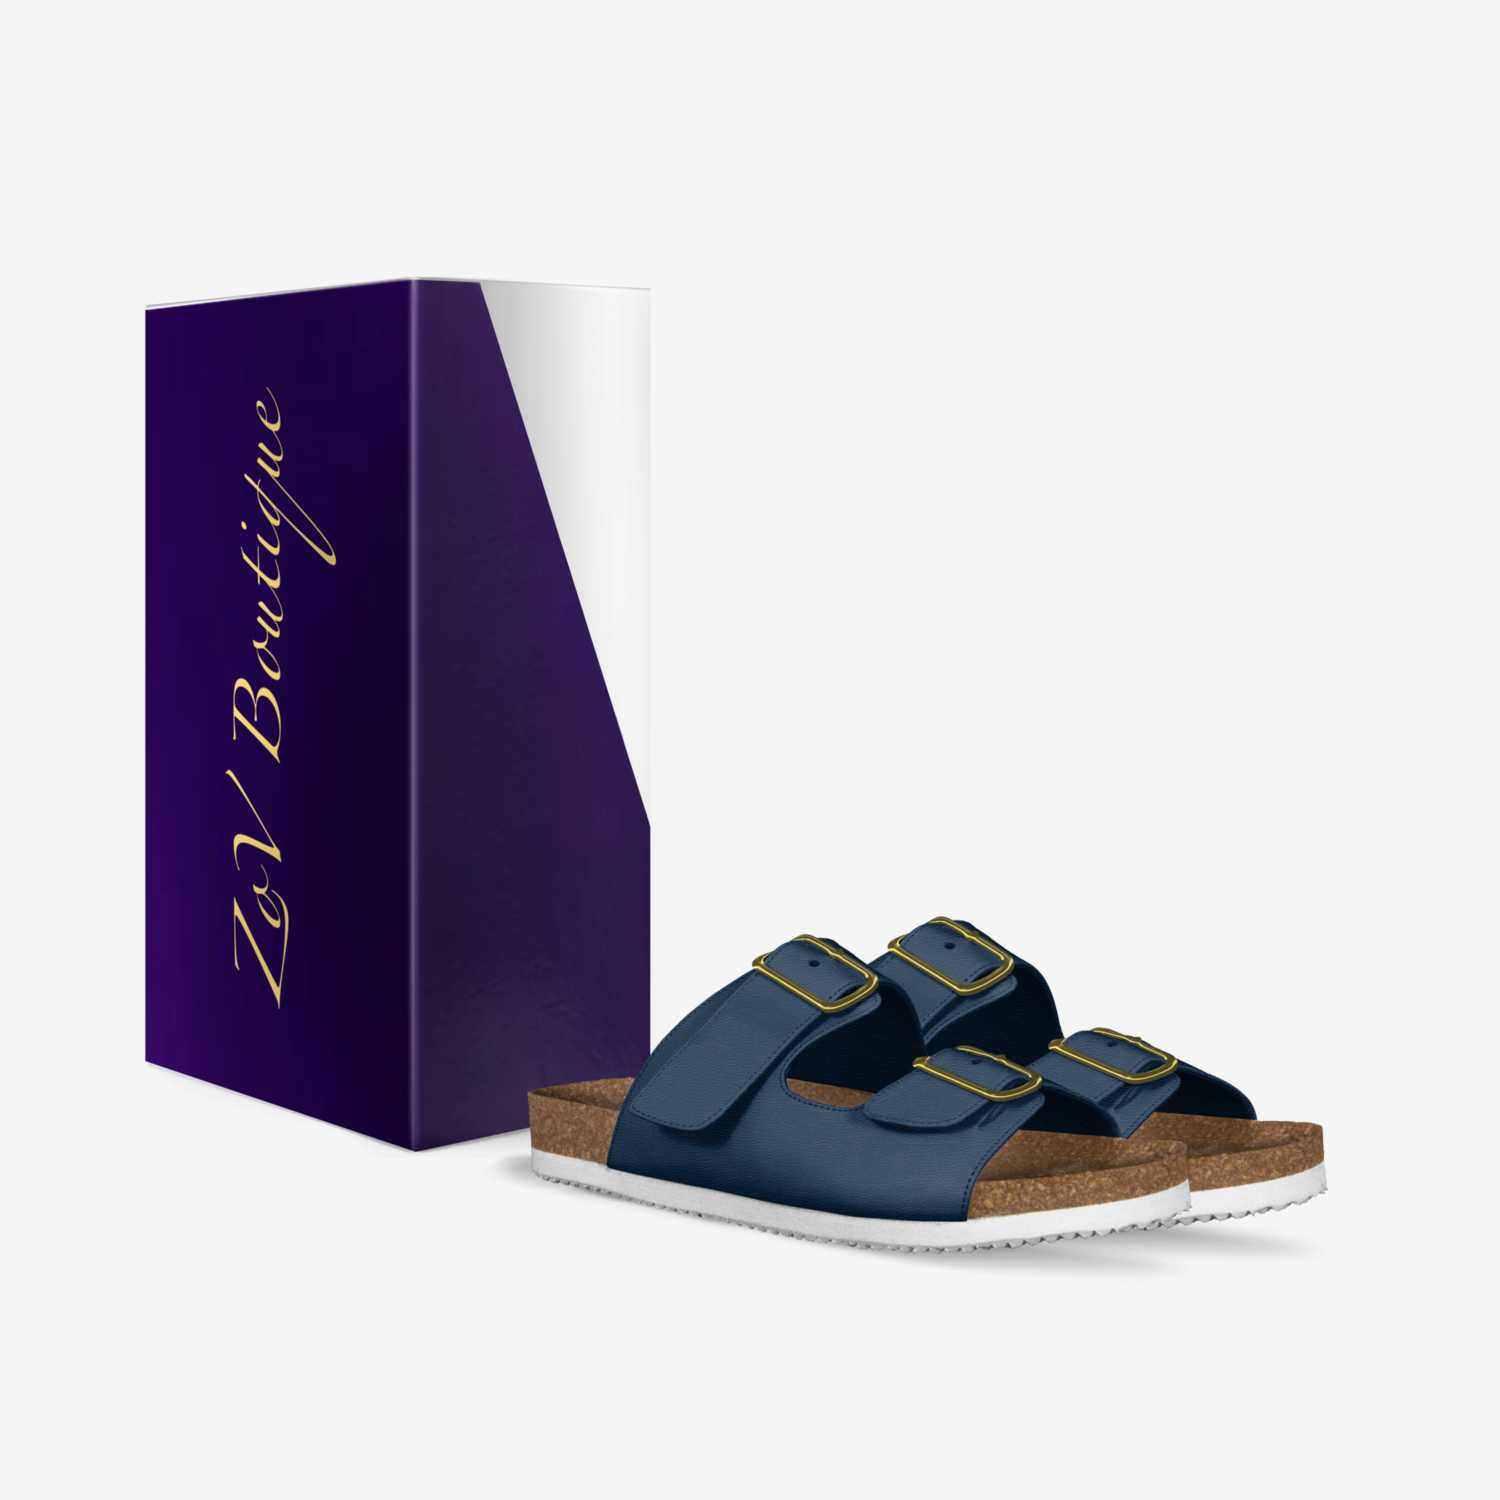 Draggin custom made in Italy shoes by Octavia Pinckney | Box view